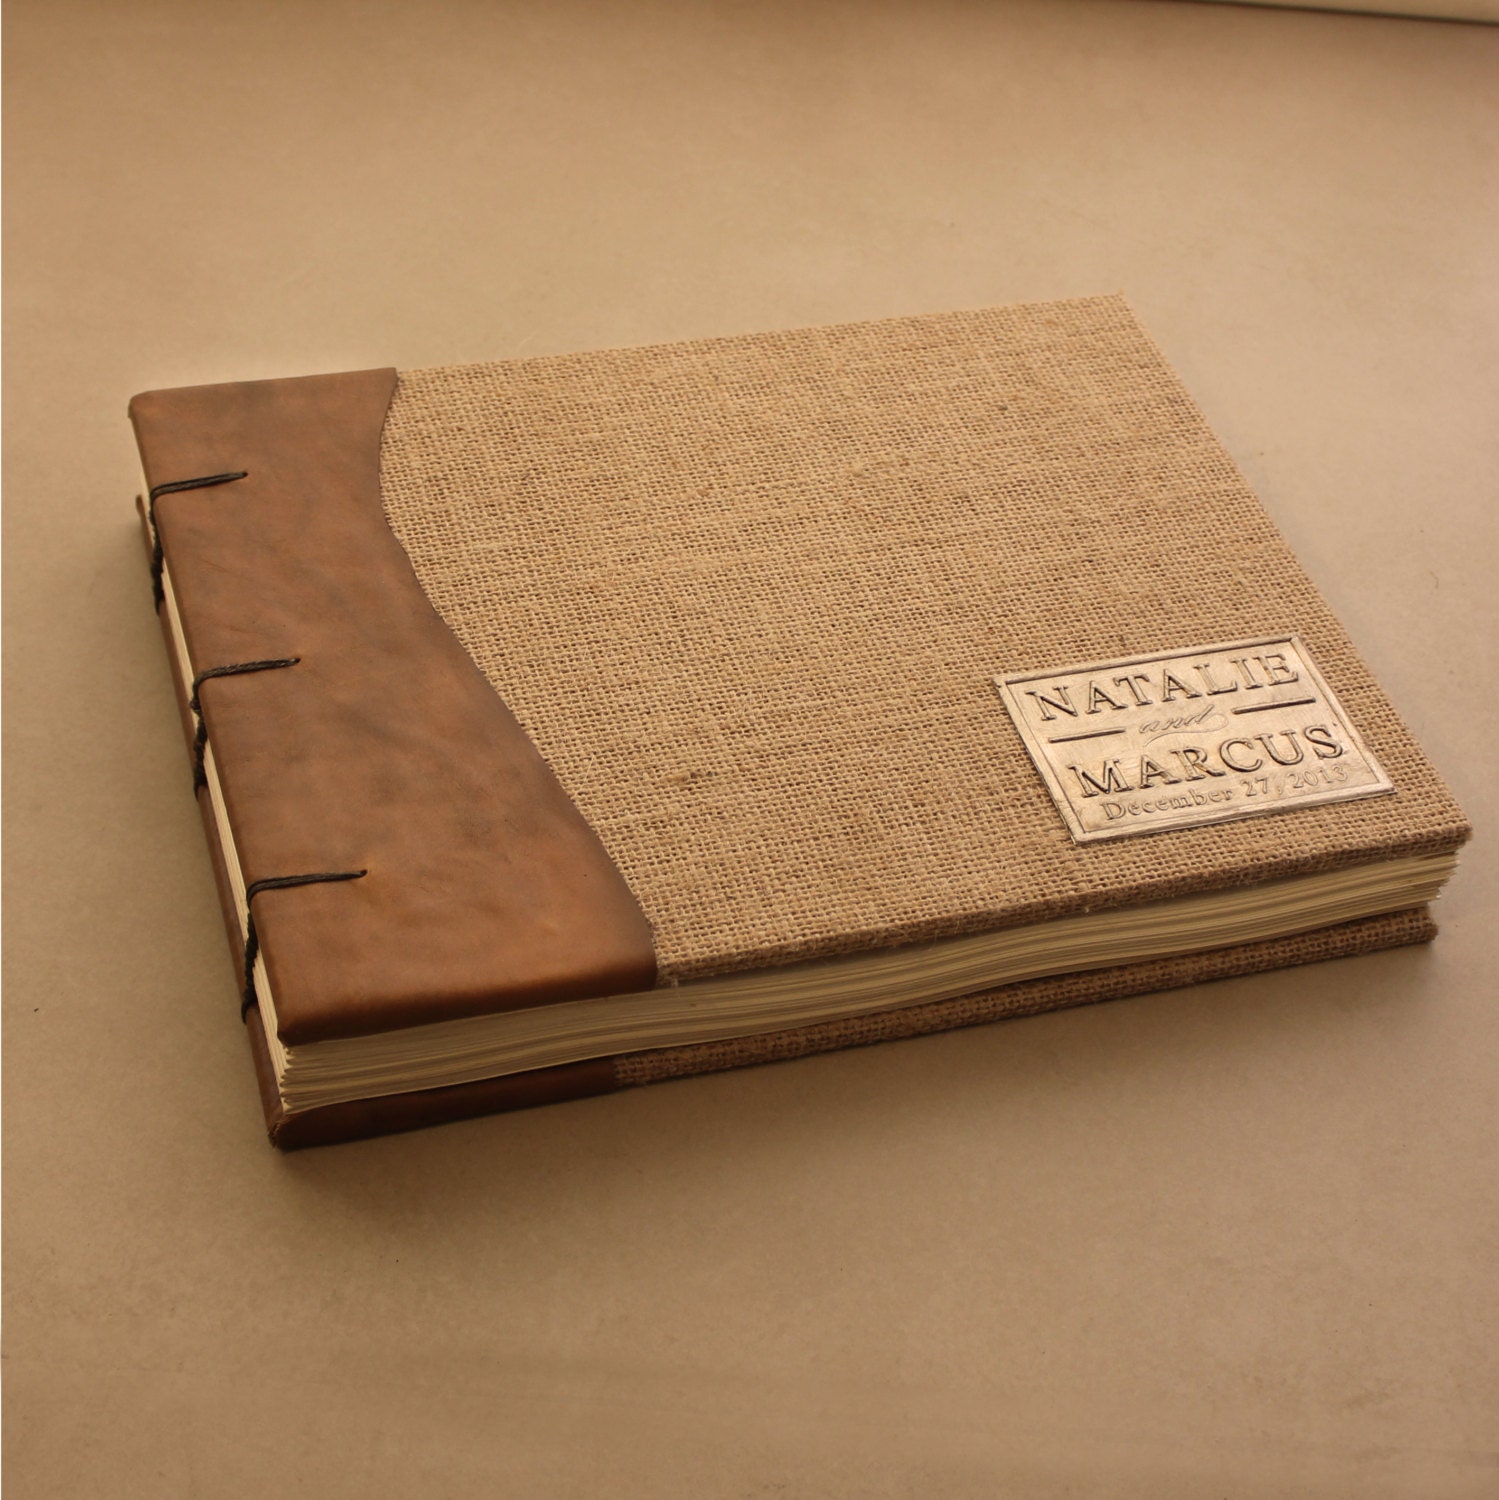 Rustic Wedding Guest Book - Leather and Burlap- Coptic Binding - Customizable